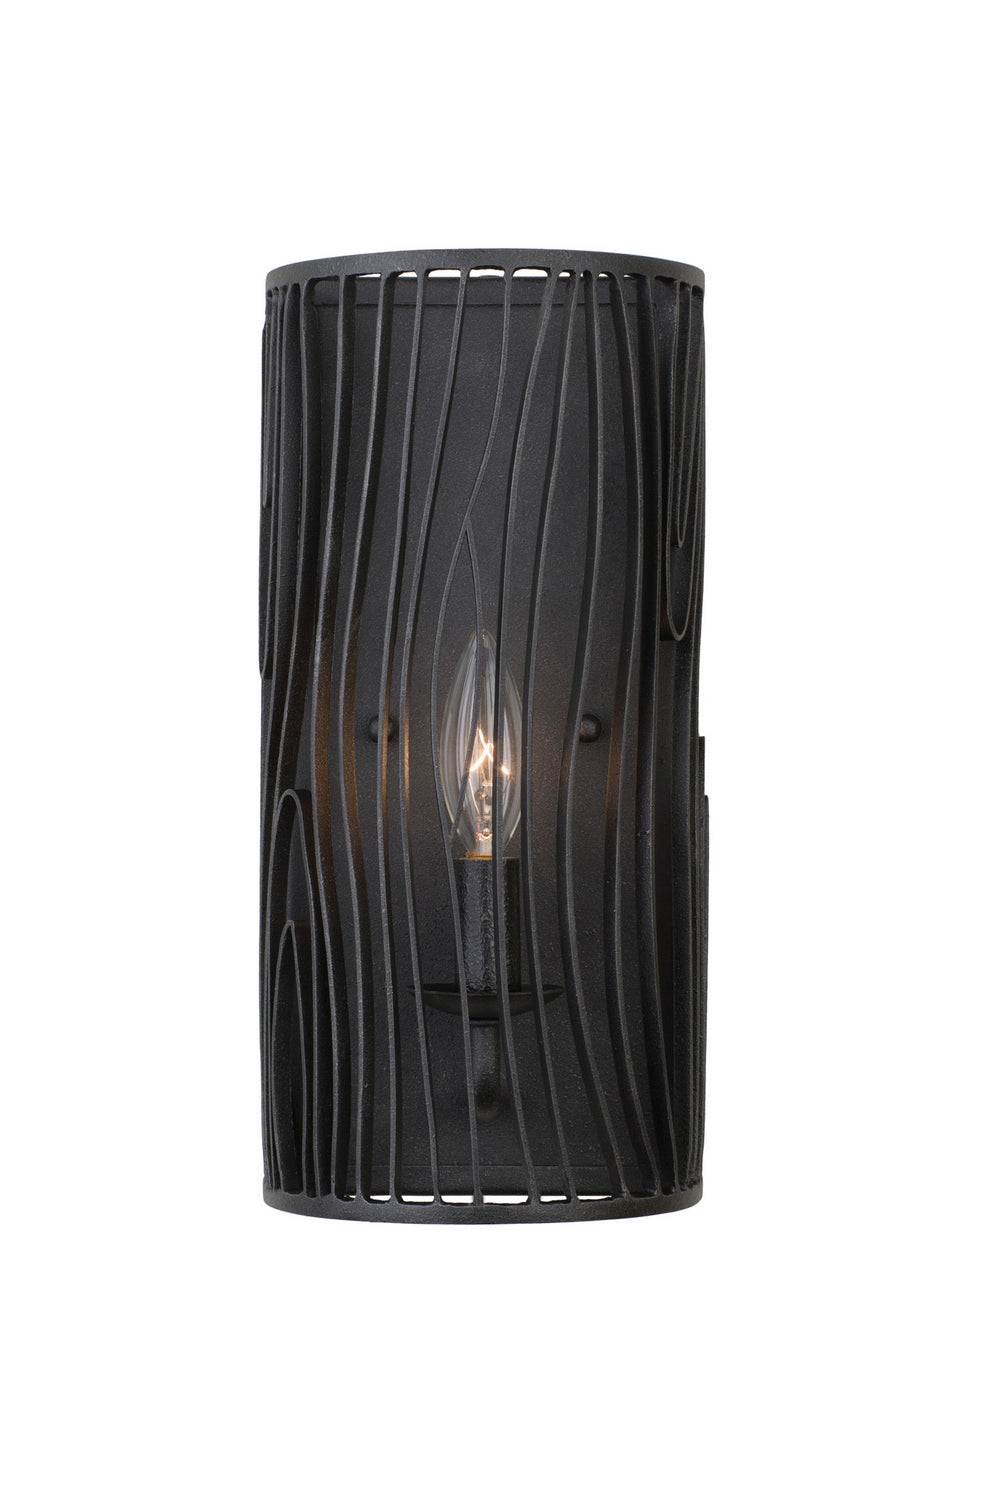 Kalco Morre 507520BI Wall Sconce Light - Black Iron